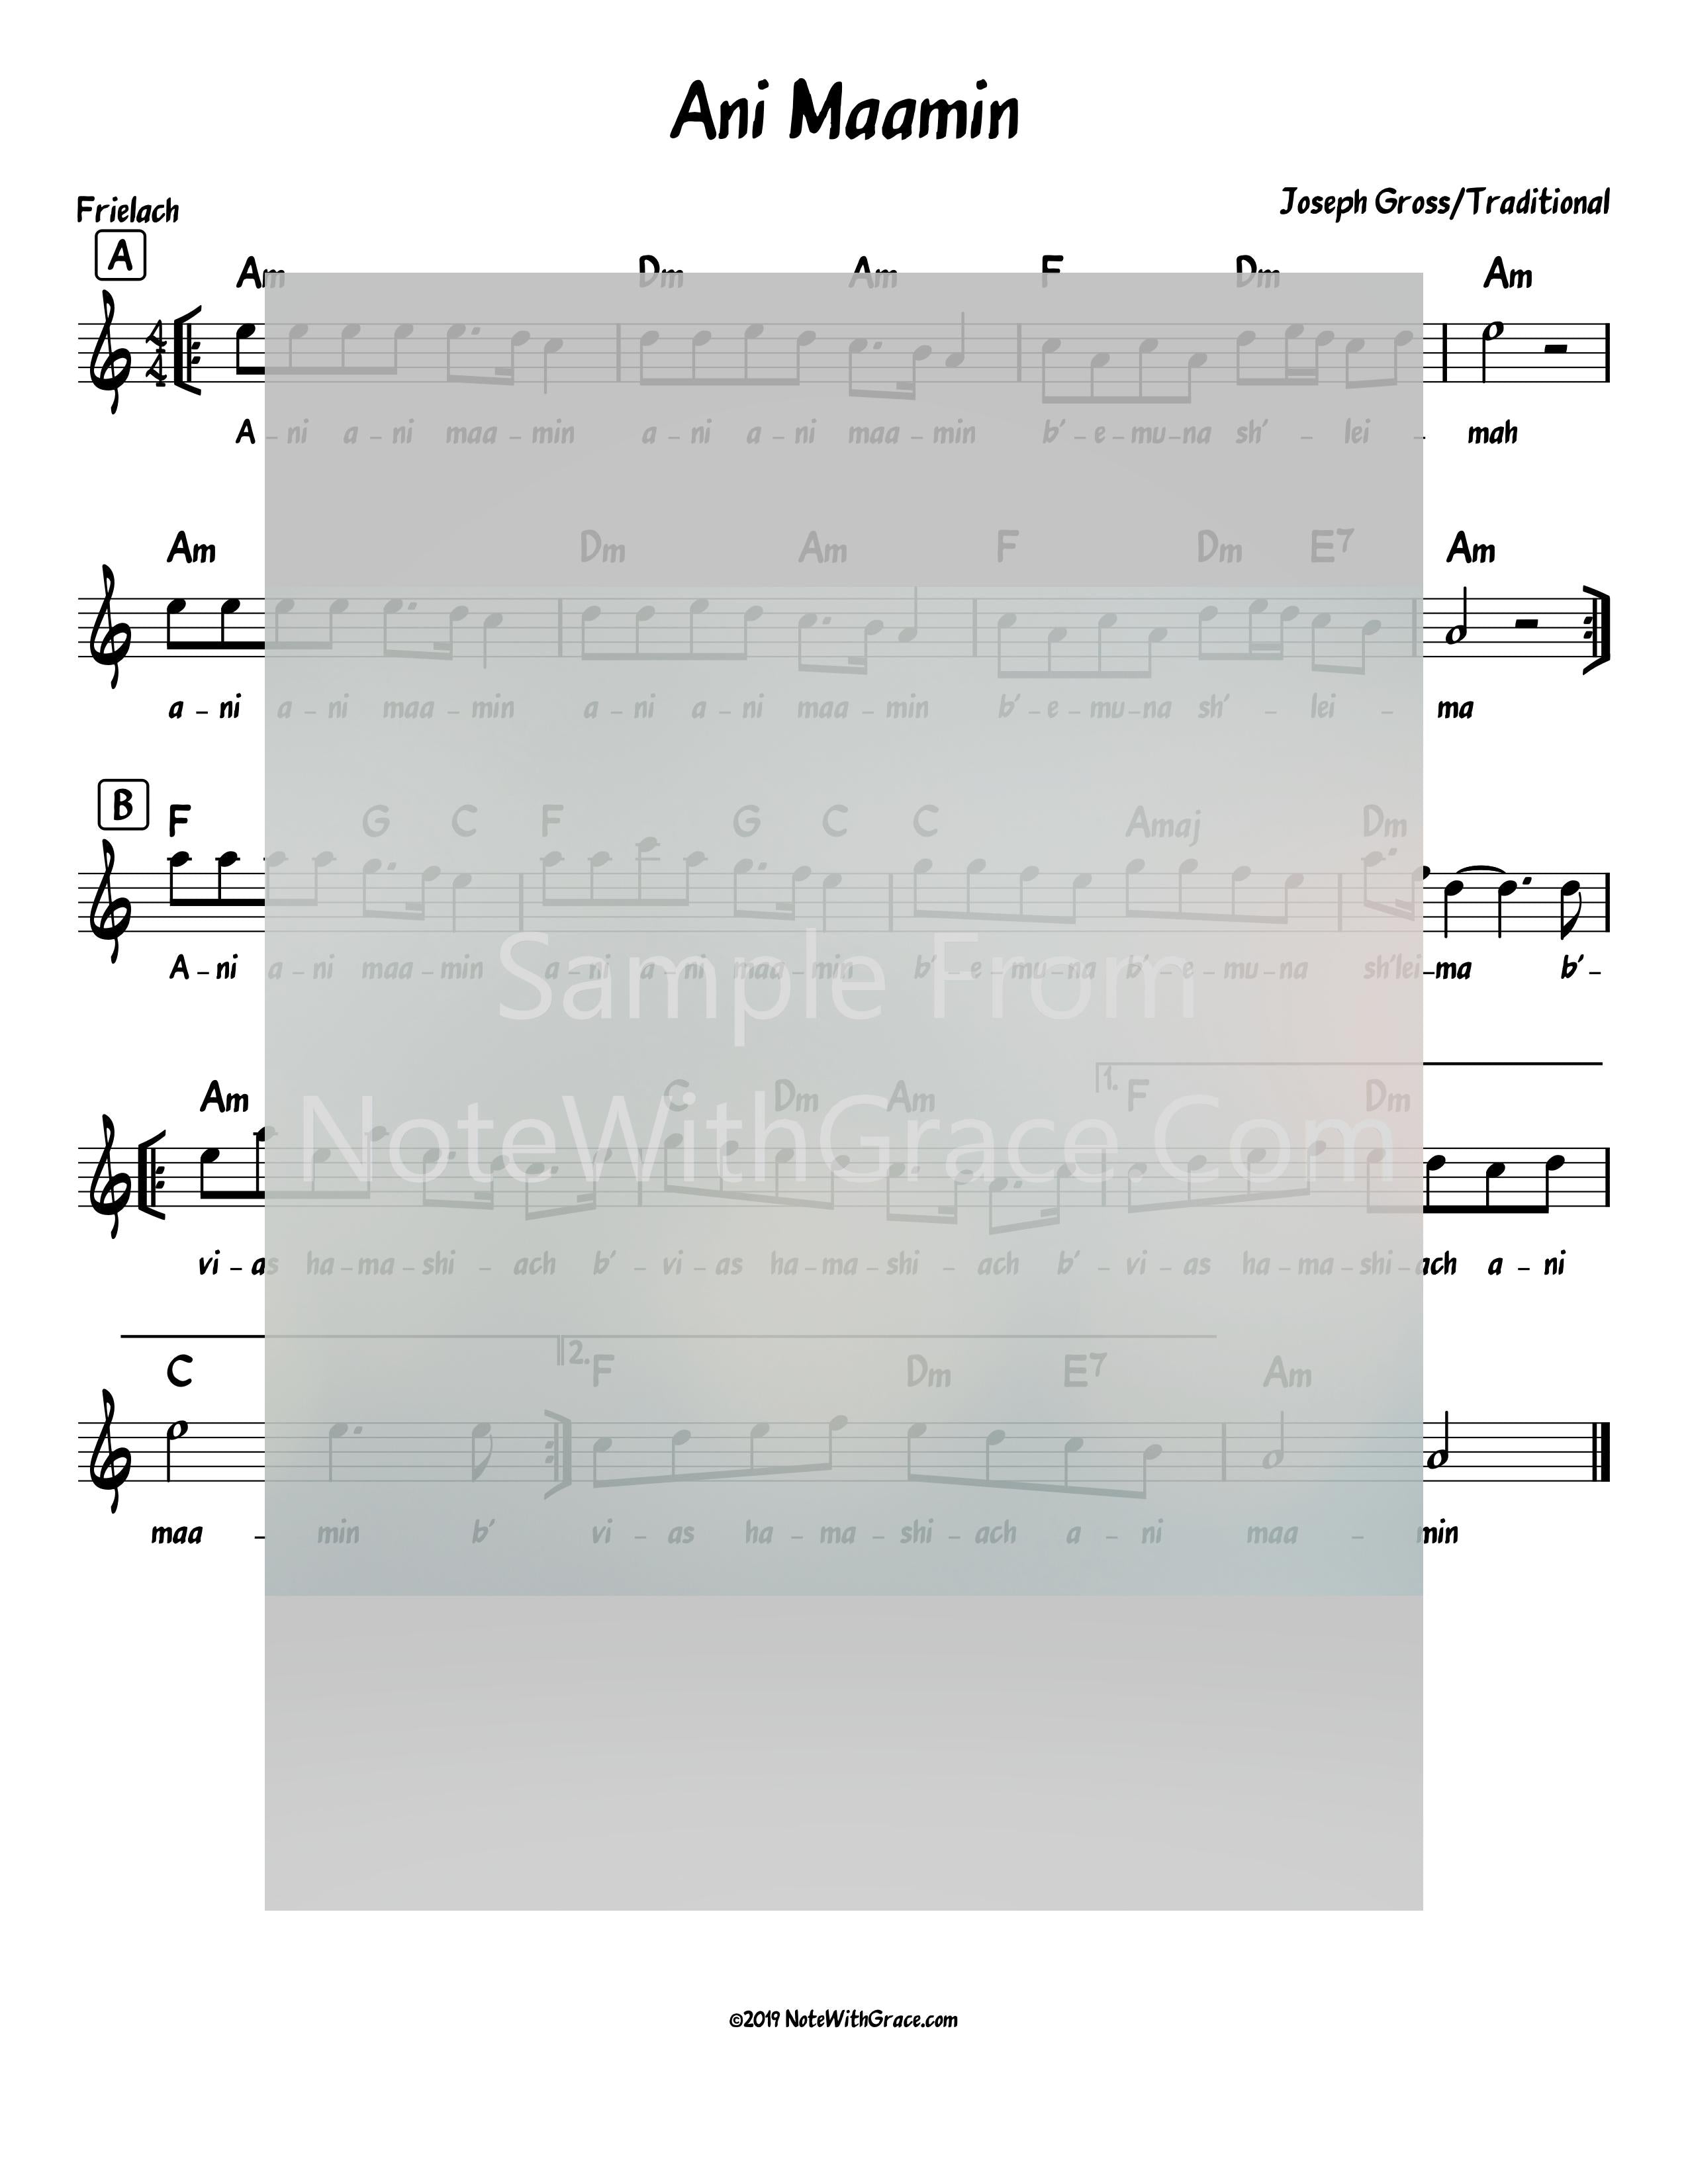 Ani Maamin Lead Sheet (Joseph Gross - Traditional)-Sheet music-NoteWithGrace.com